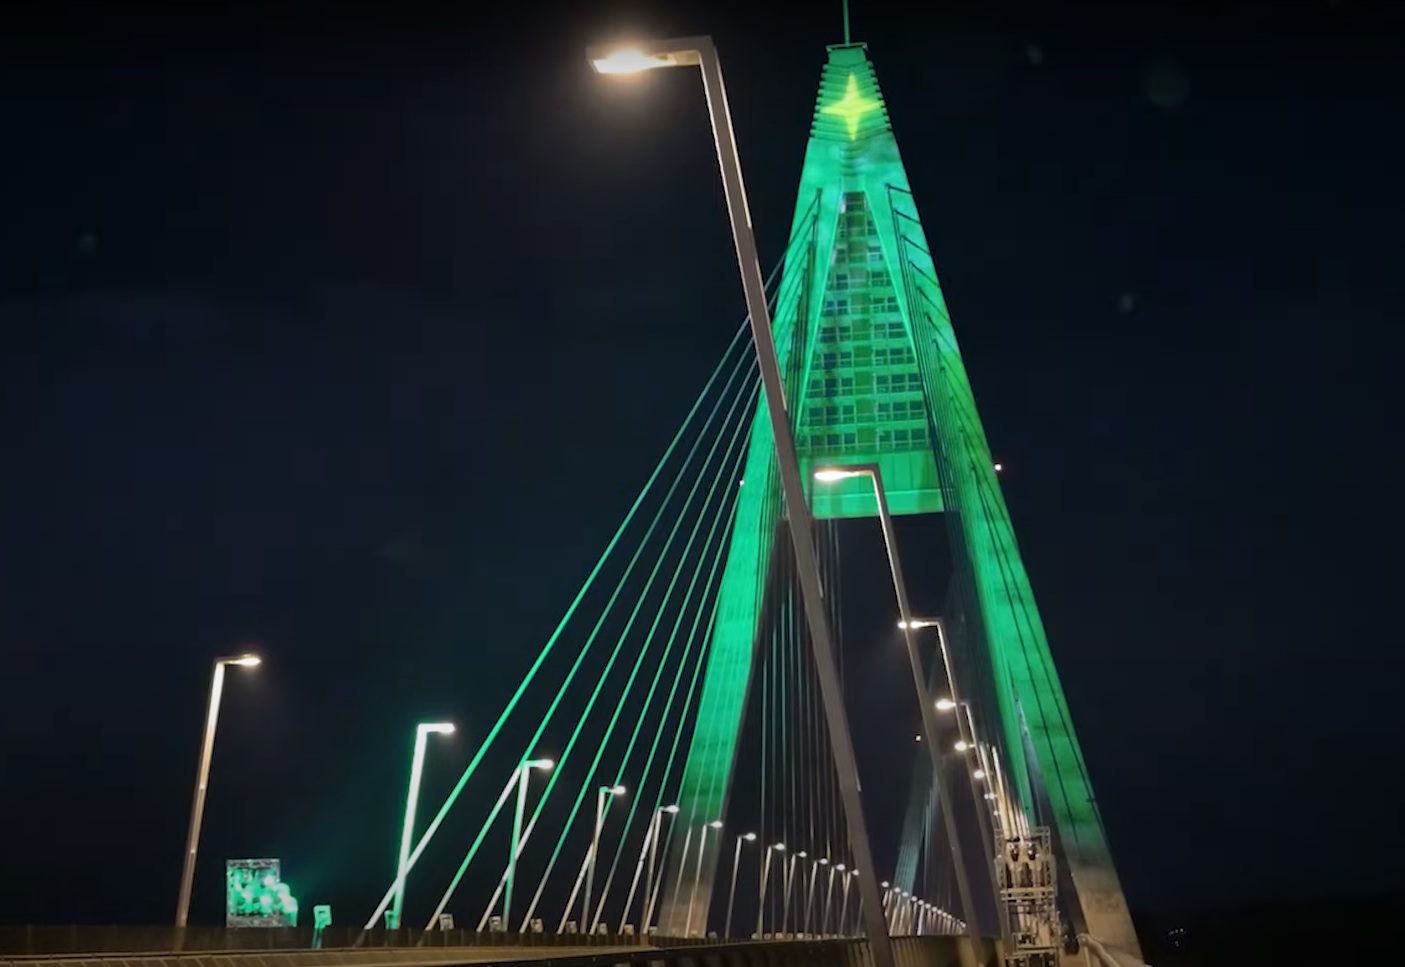 Megyeri Bridge Near Budapest Illuminated as Christmas Tree